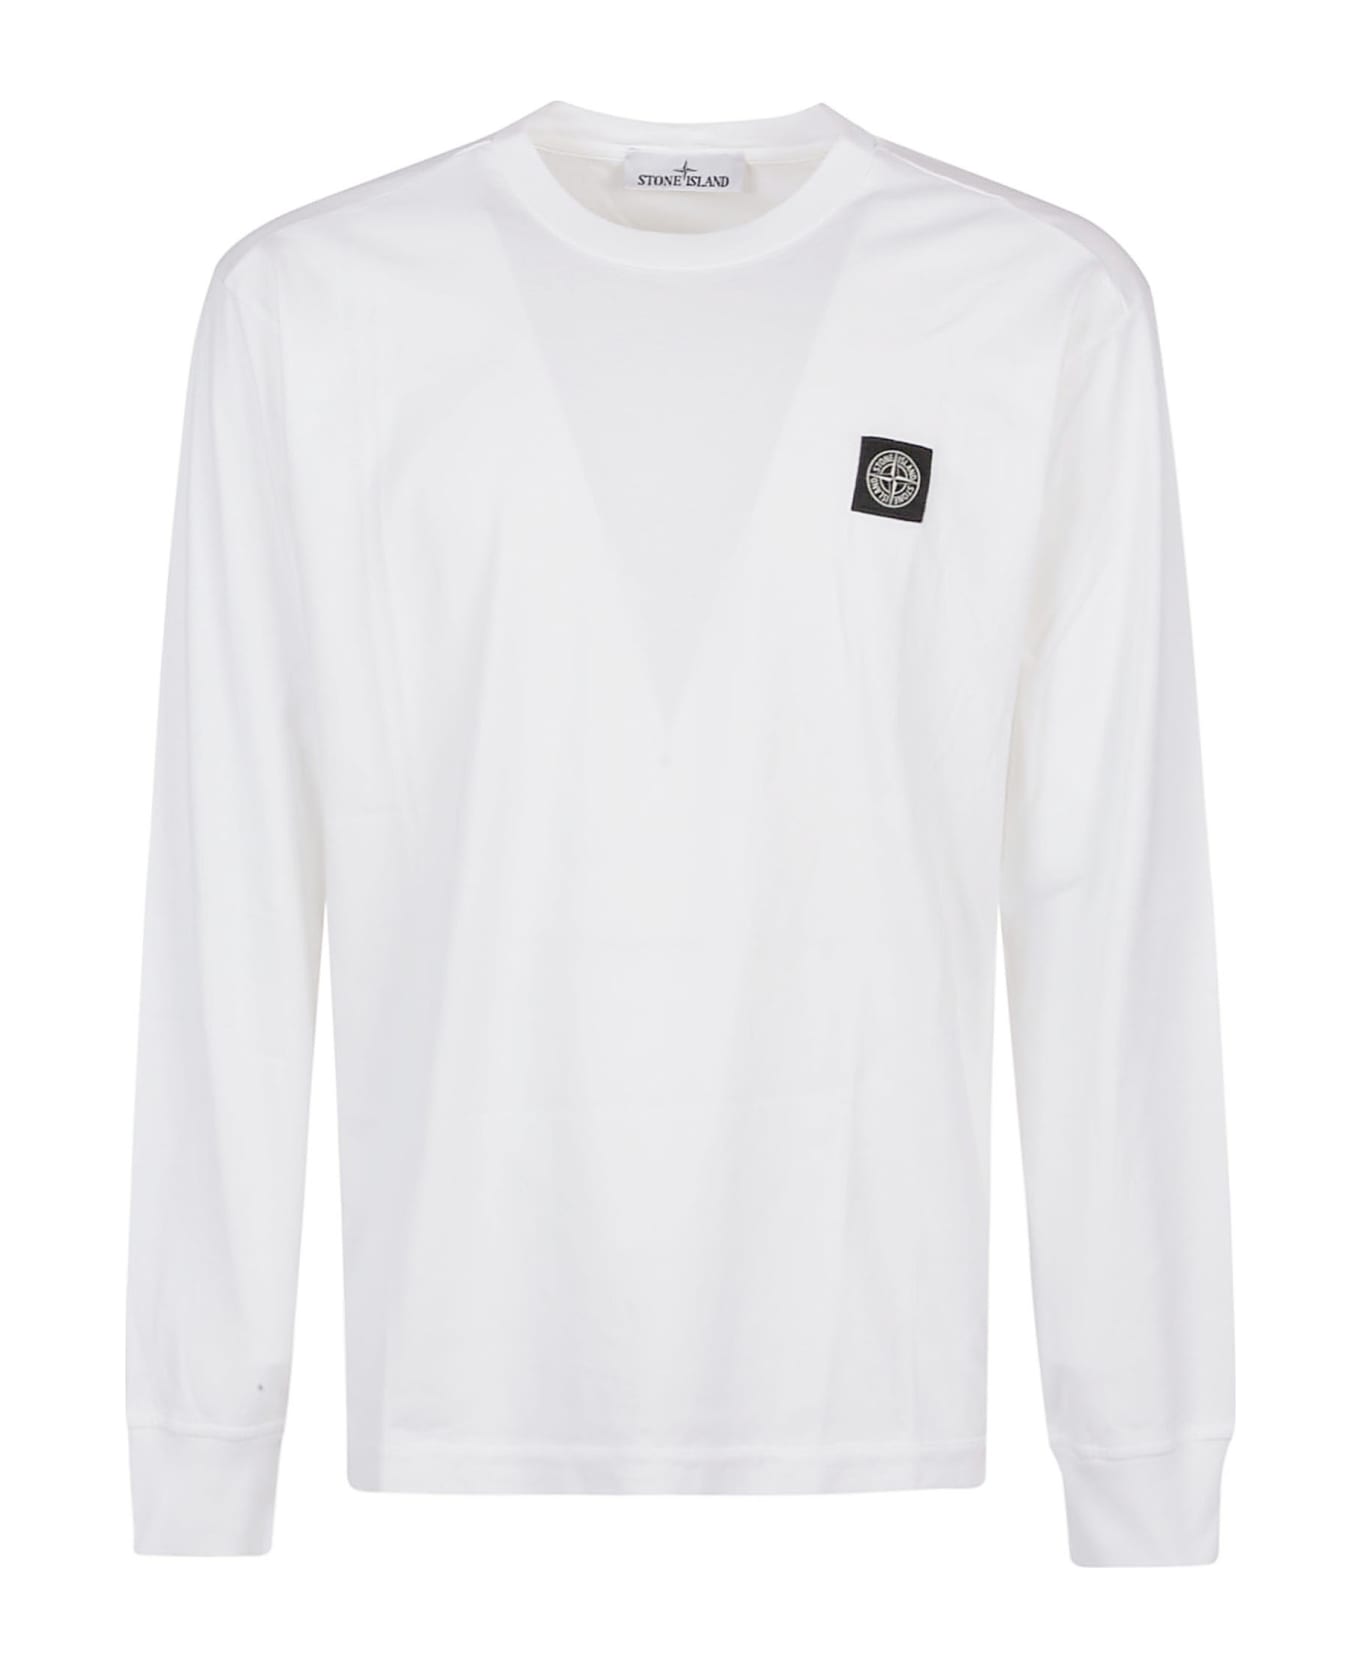 Stone Island Long Sleeve T-shirt - White